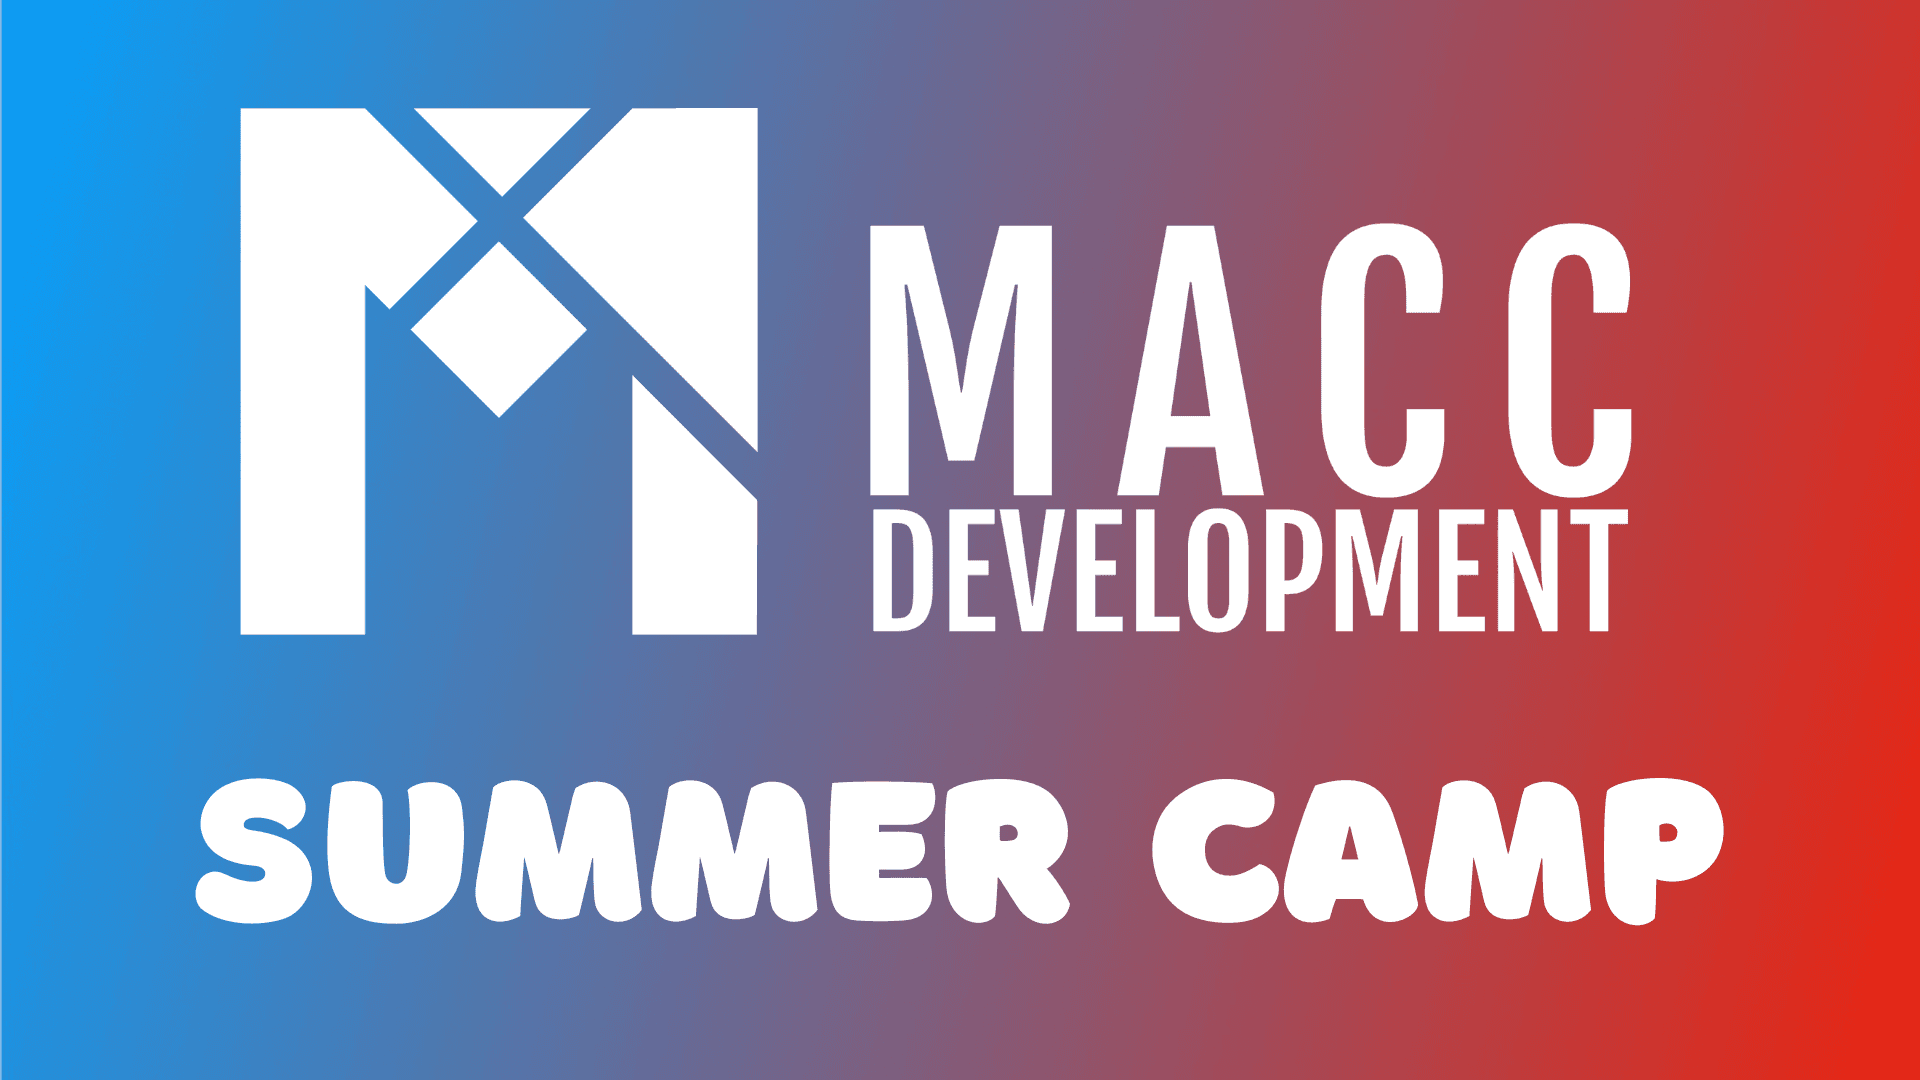 MACC Development Summer Camp